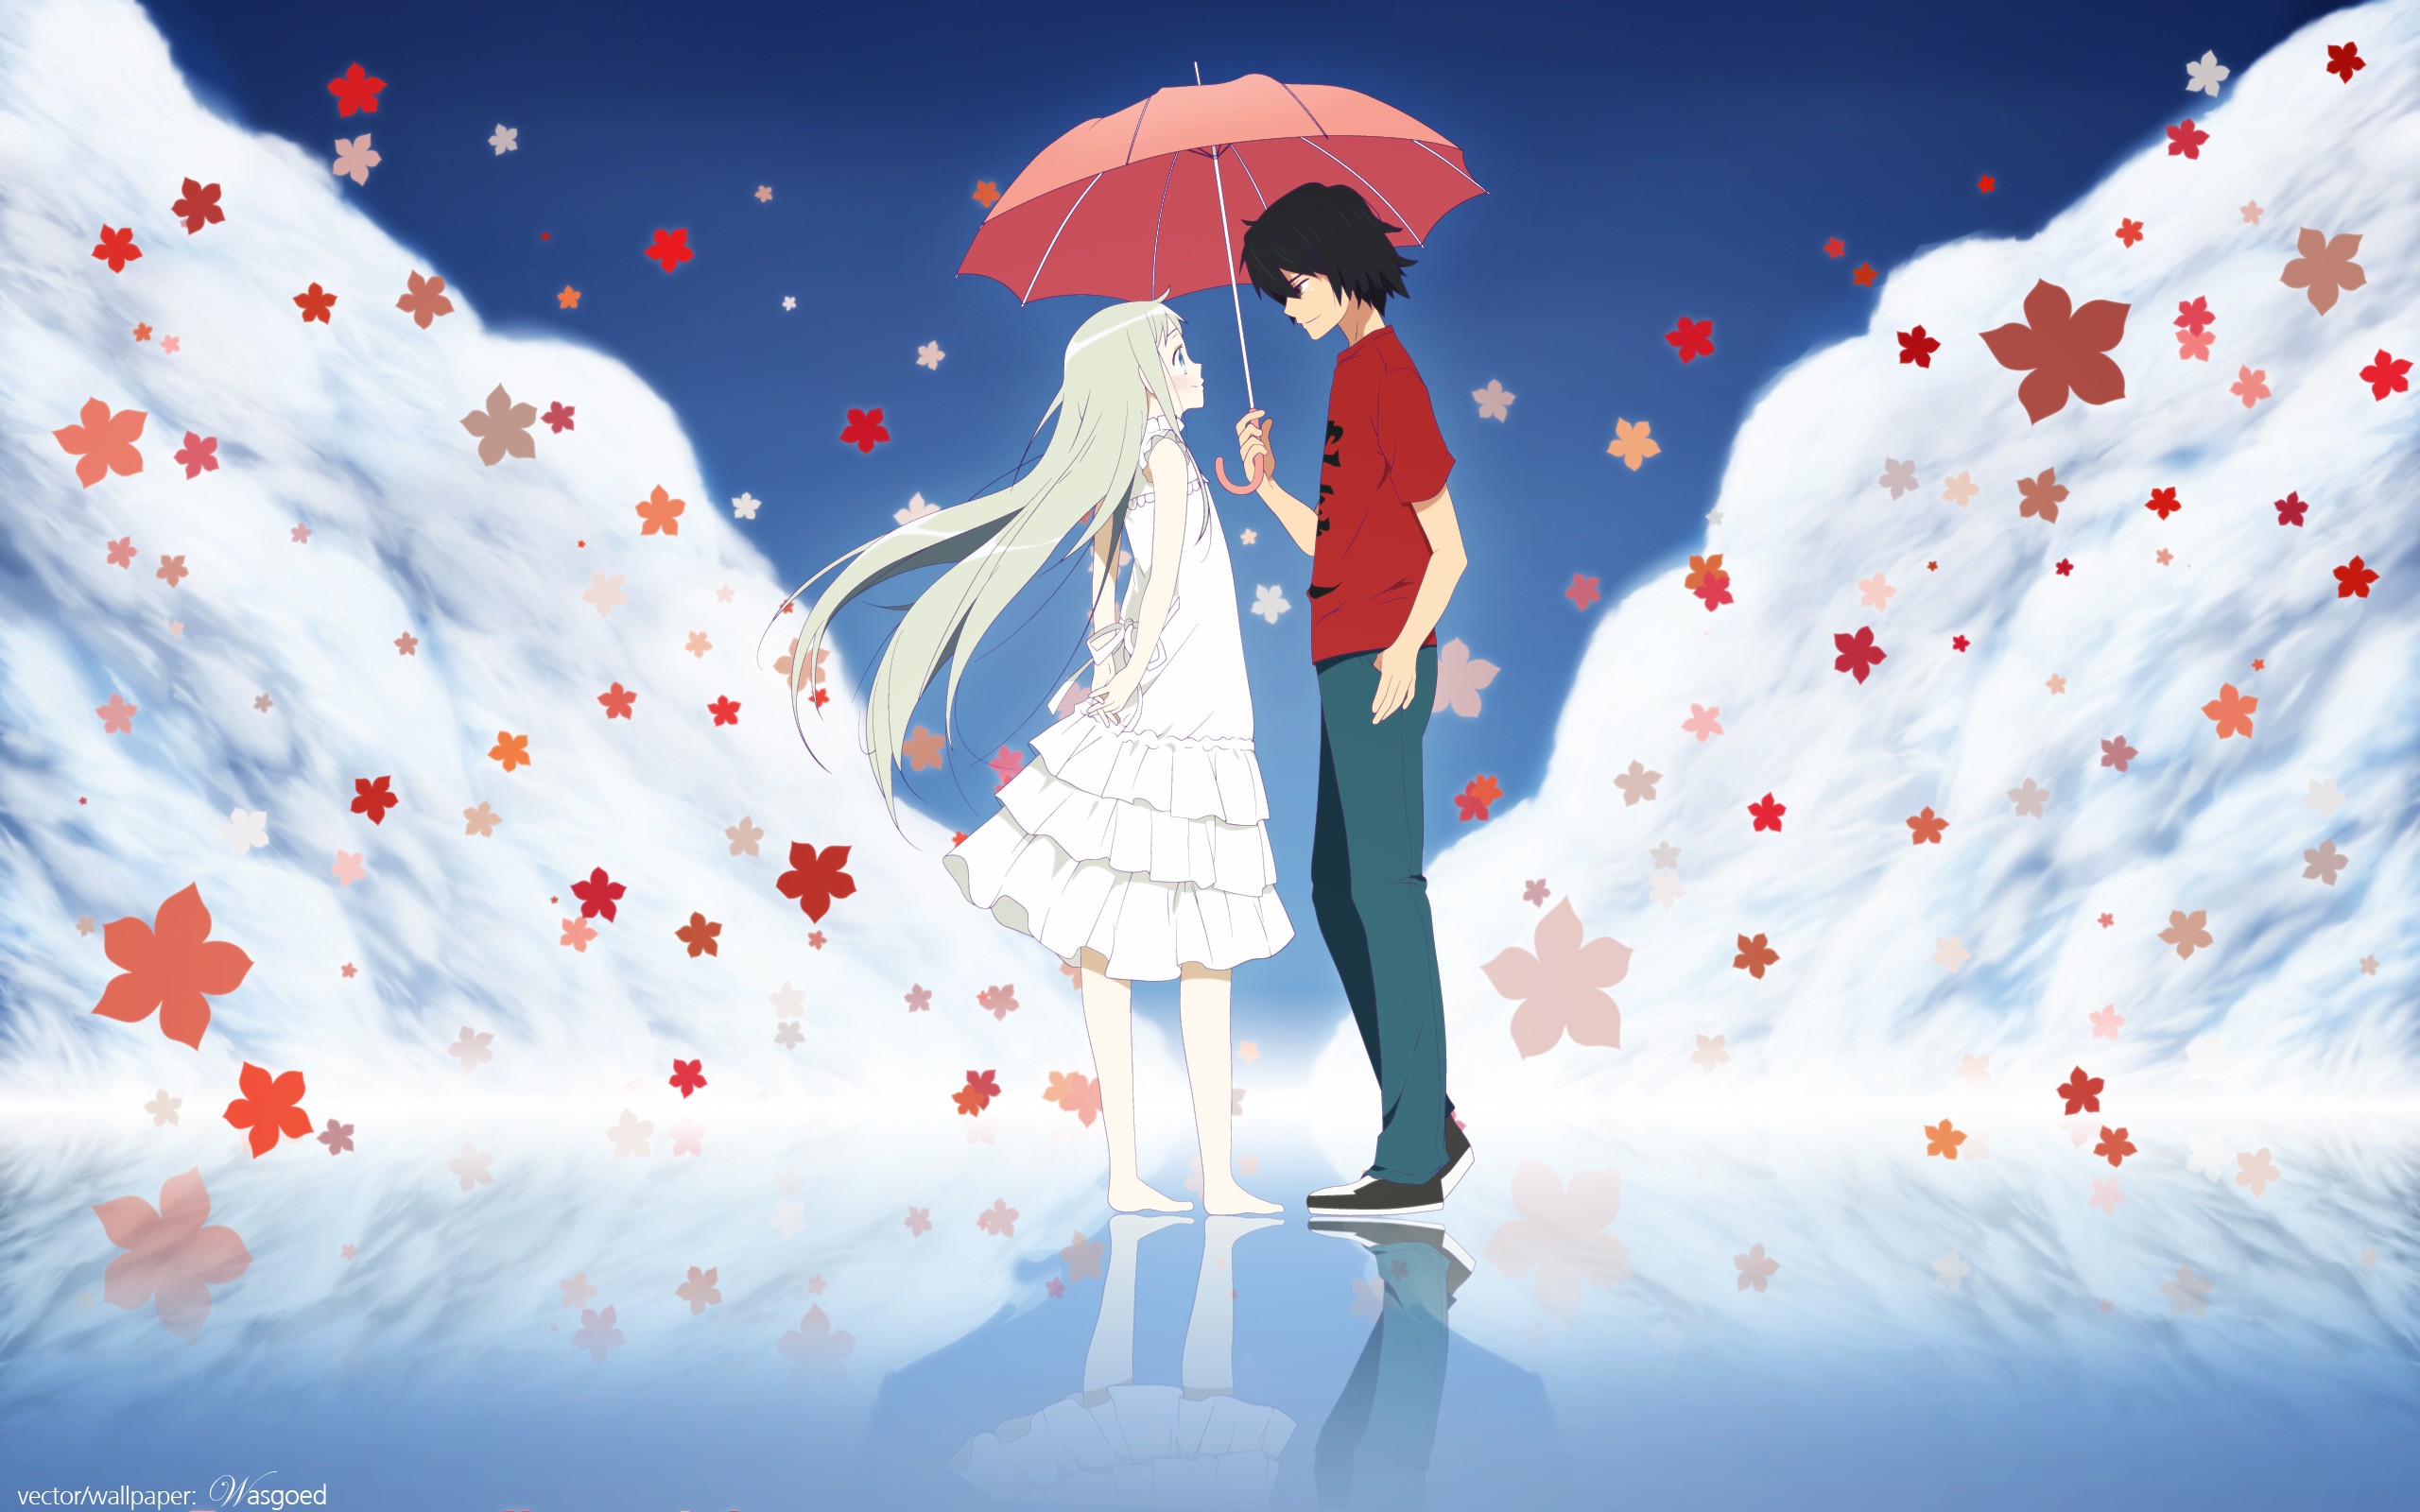 anohana wallpaper,illustration,sky,umbrella,anime,art